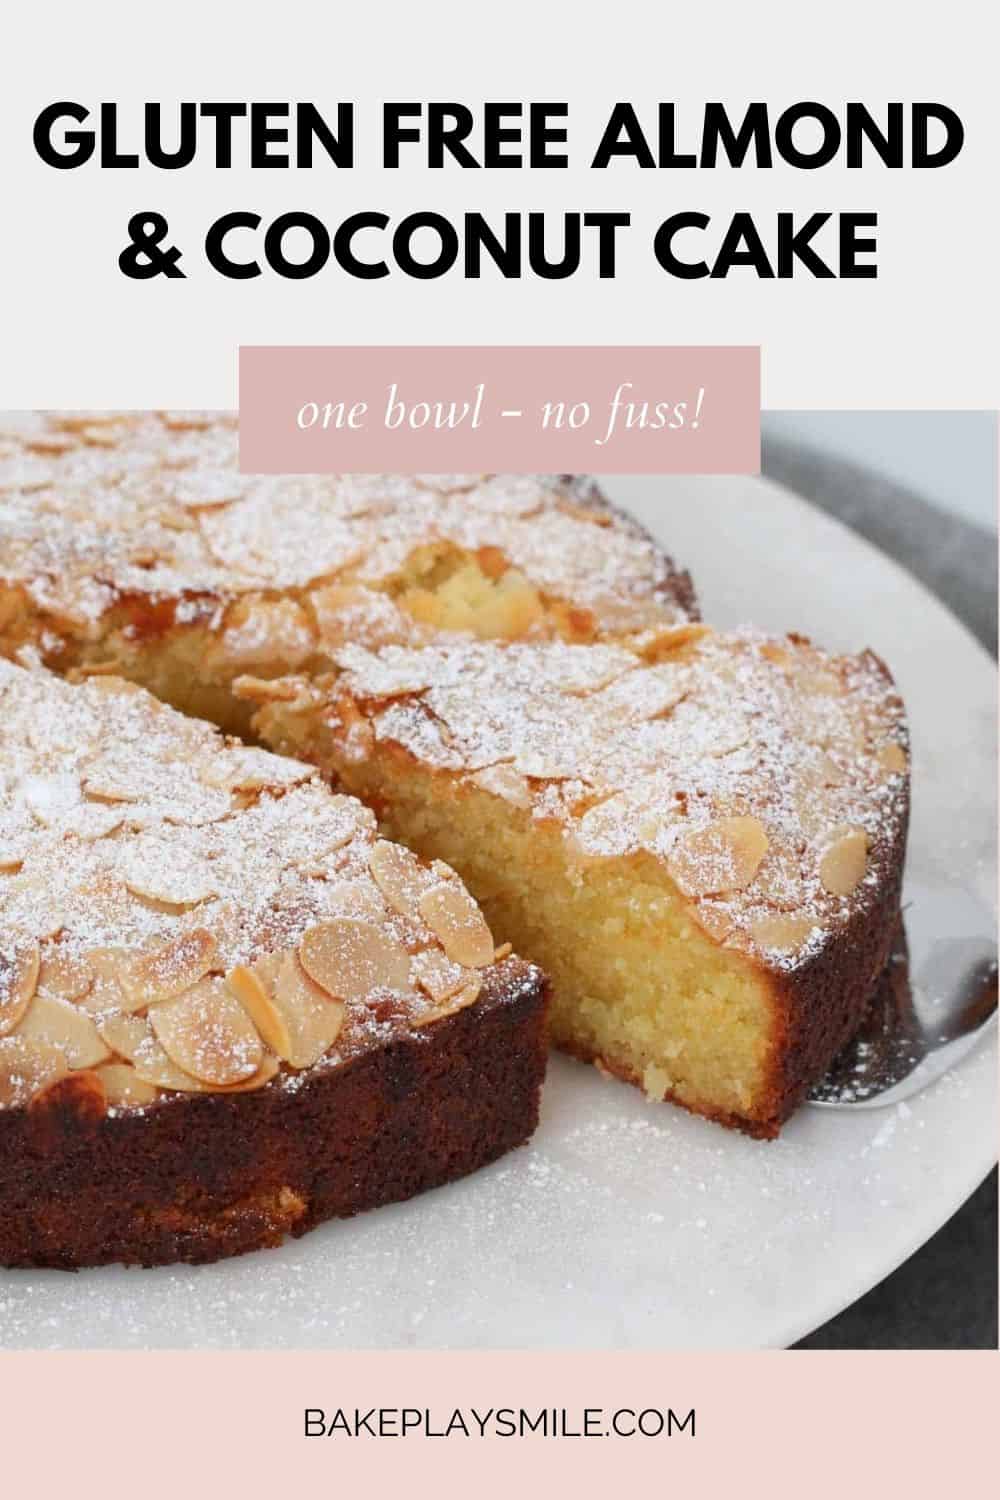 https://bakeplaysmile.com/wp-content/uploads/2022/06/Gluten-Free-Almond-Coconut-Cake.jpg